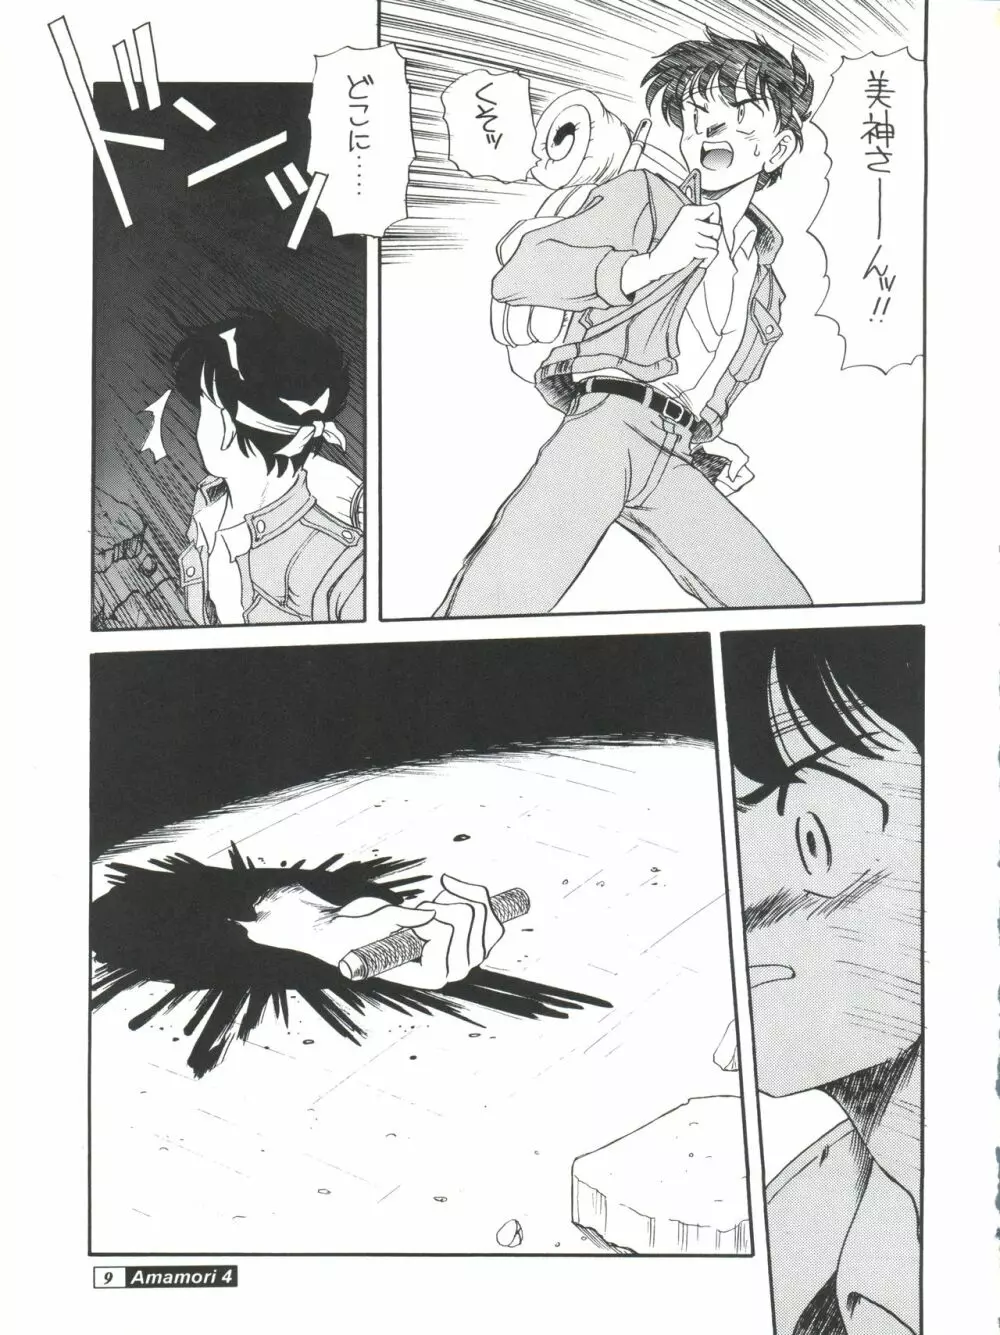 Amamori 4 - page9